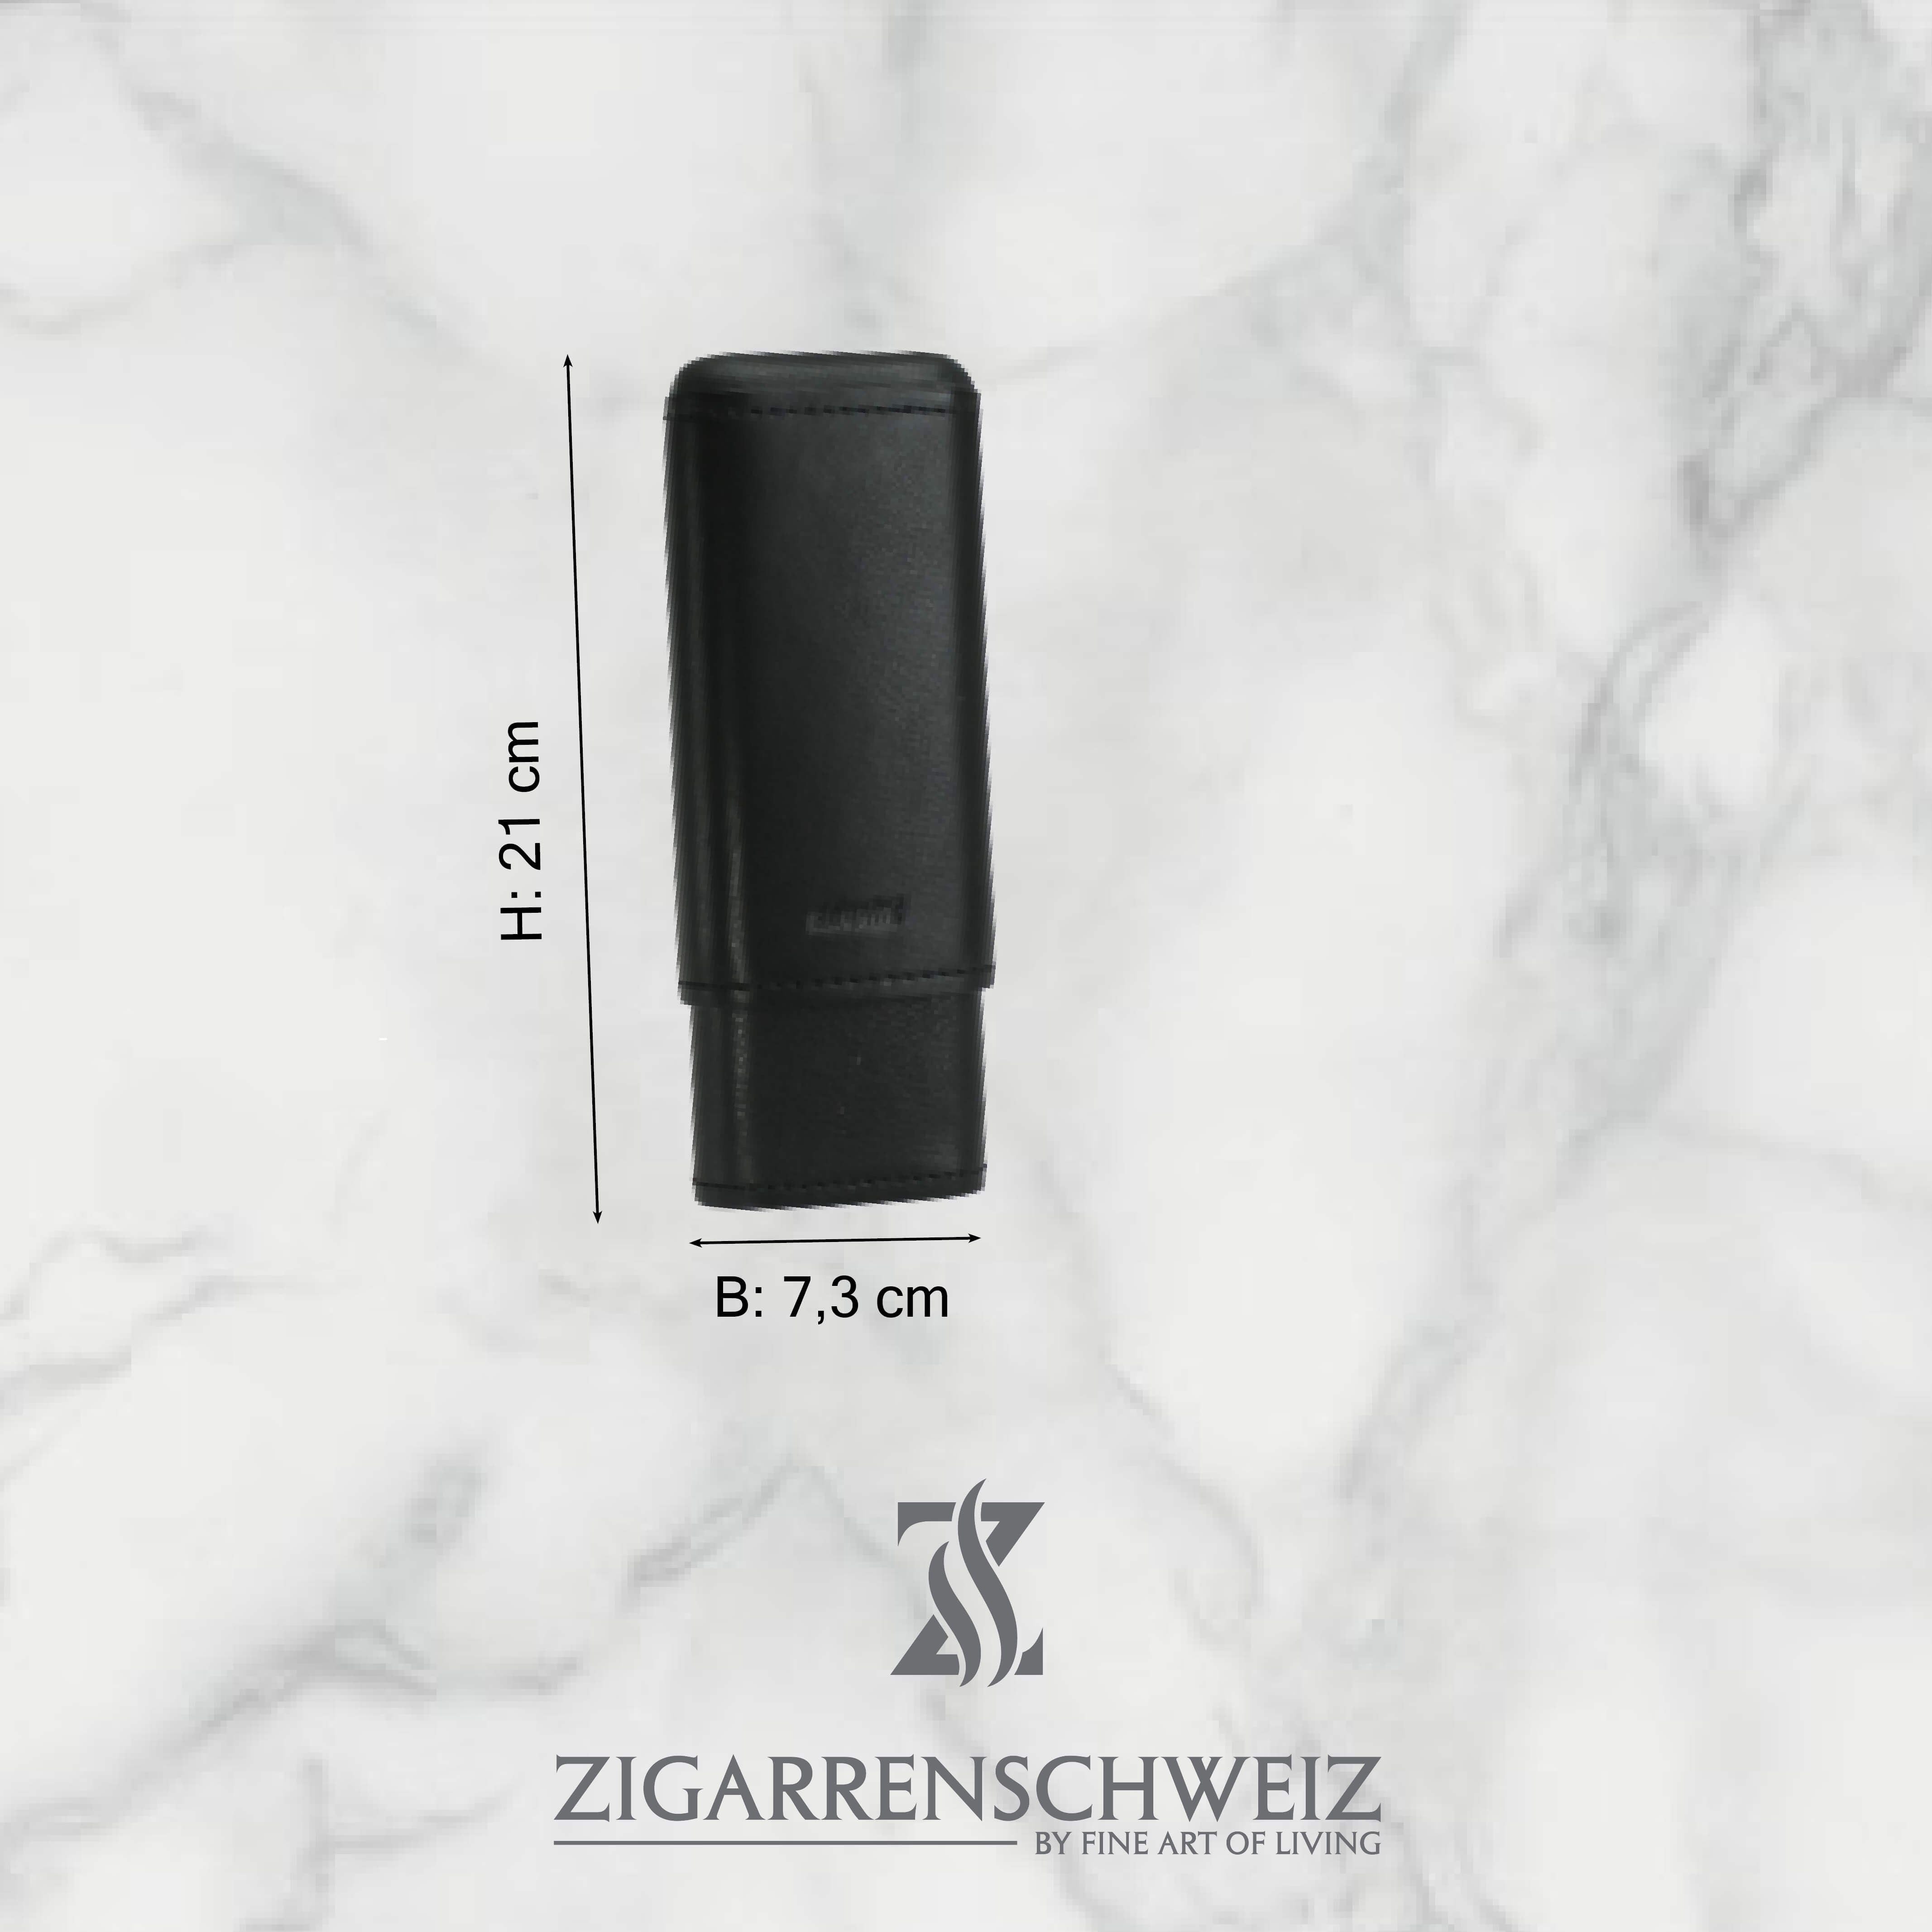 Adorini Zigarrenetui, Material: Echtleder, Kapazität: 2-3 Zigarren, Farbe: Schwarz, mit Abmessungen